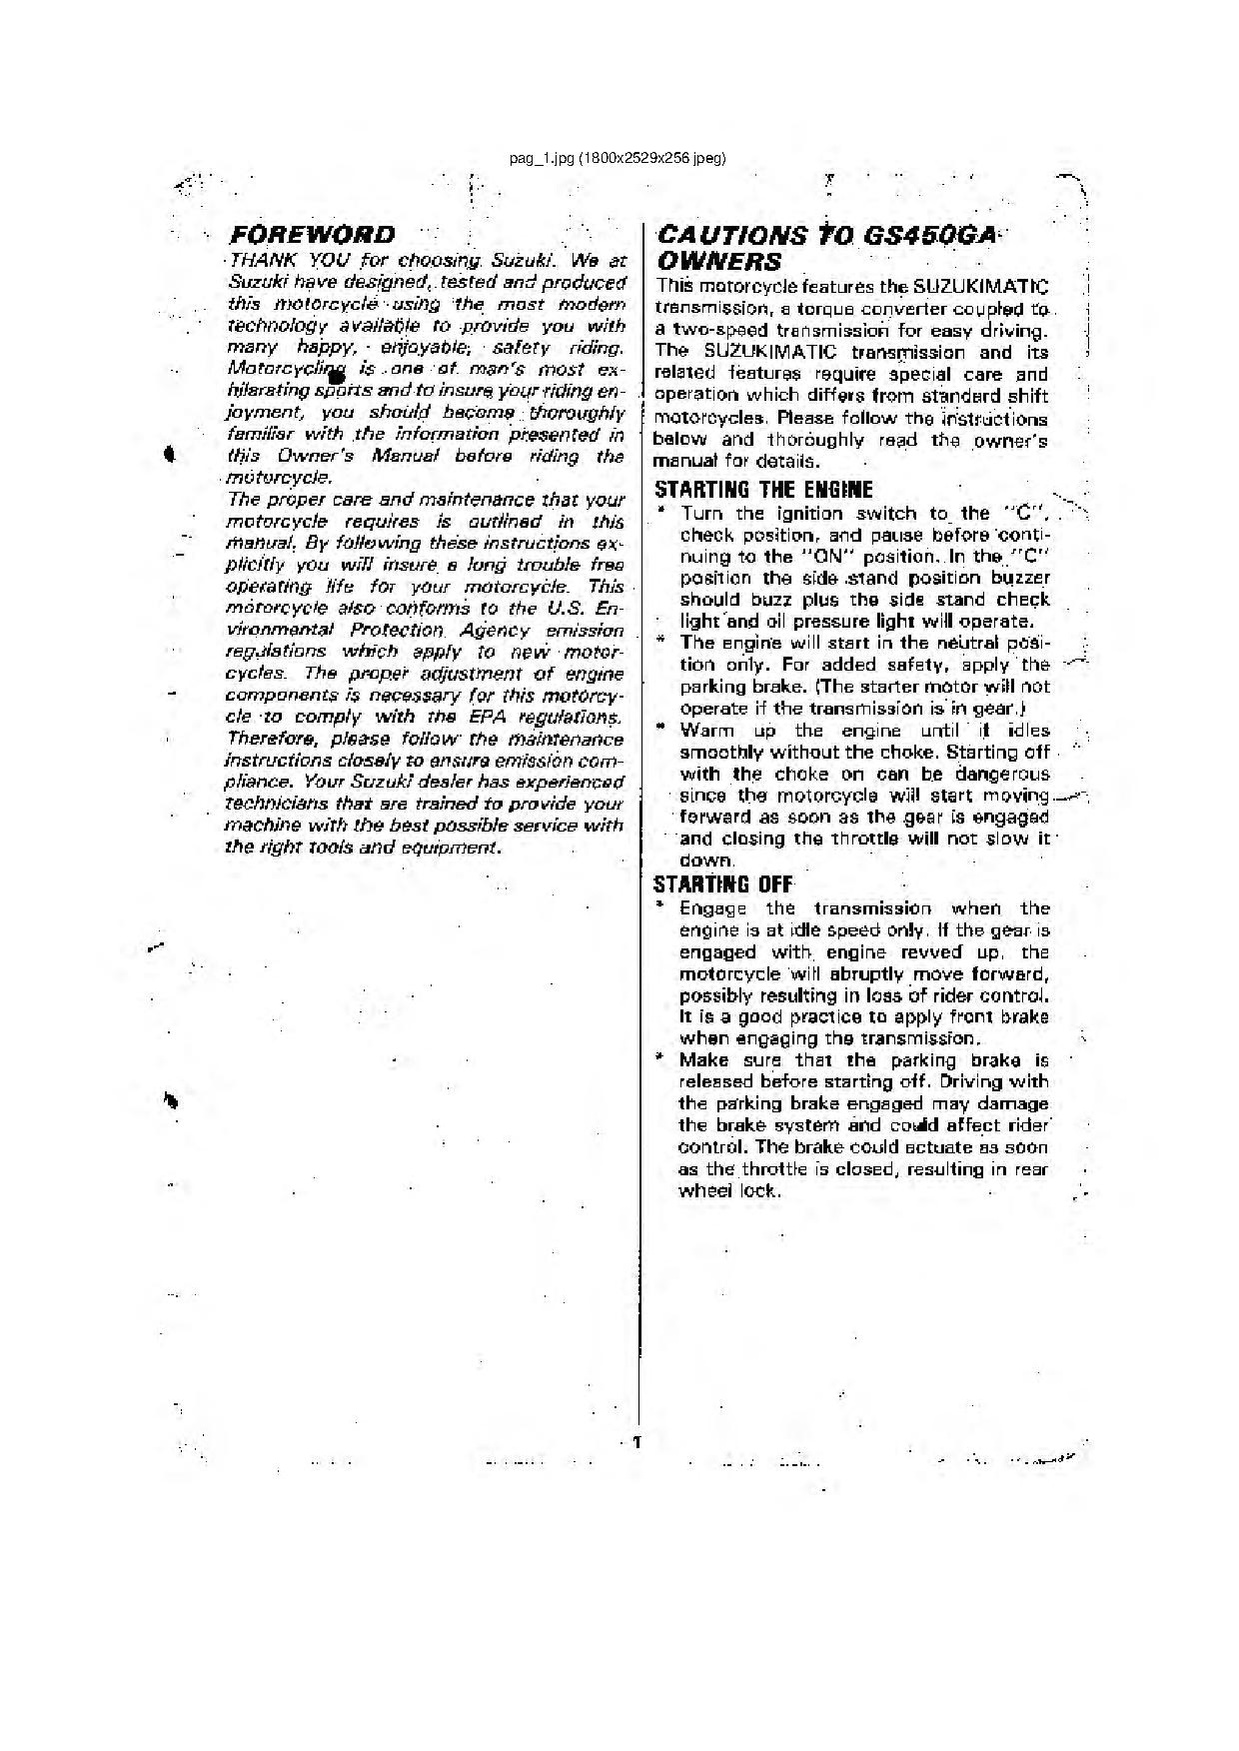 File:Suzuki GS450GA 1983 Owners Manual.pdf - CycleChaos